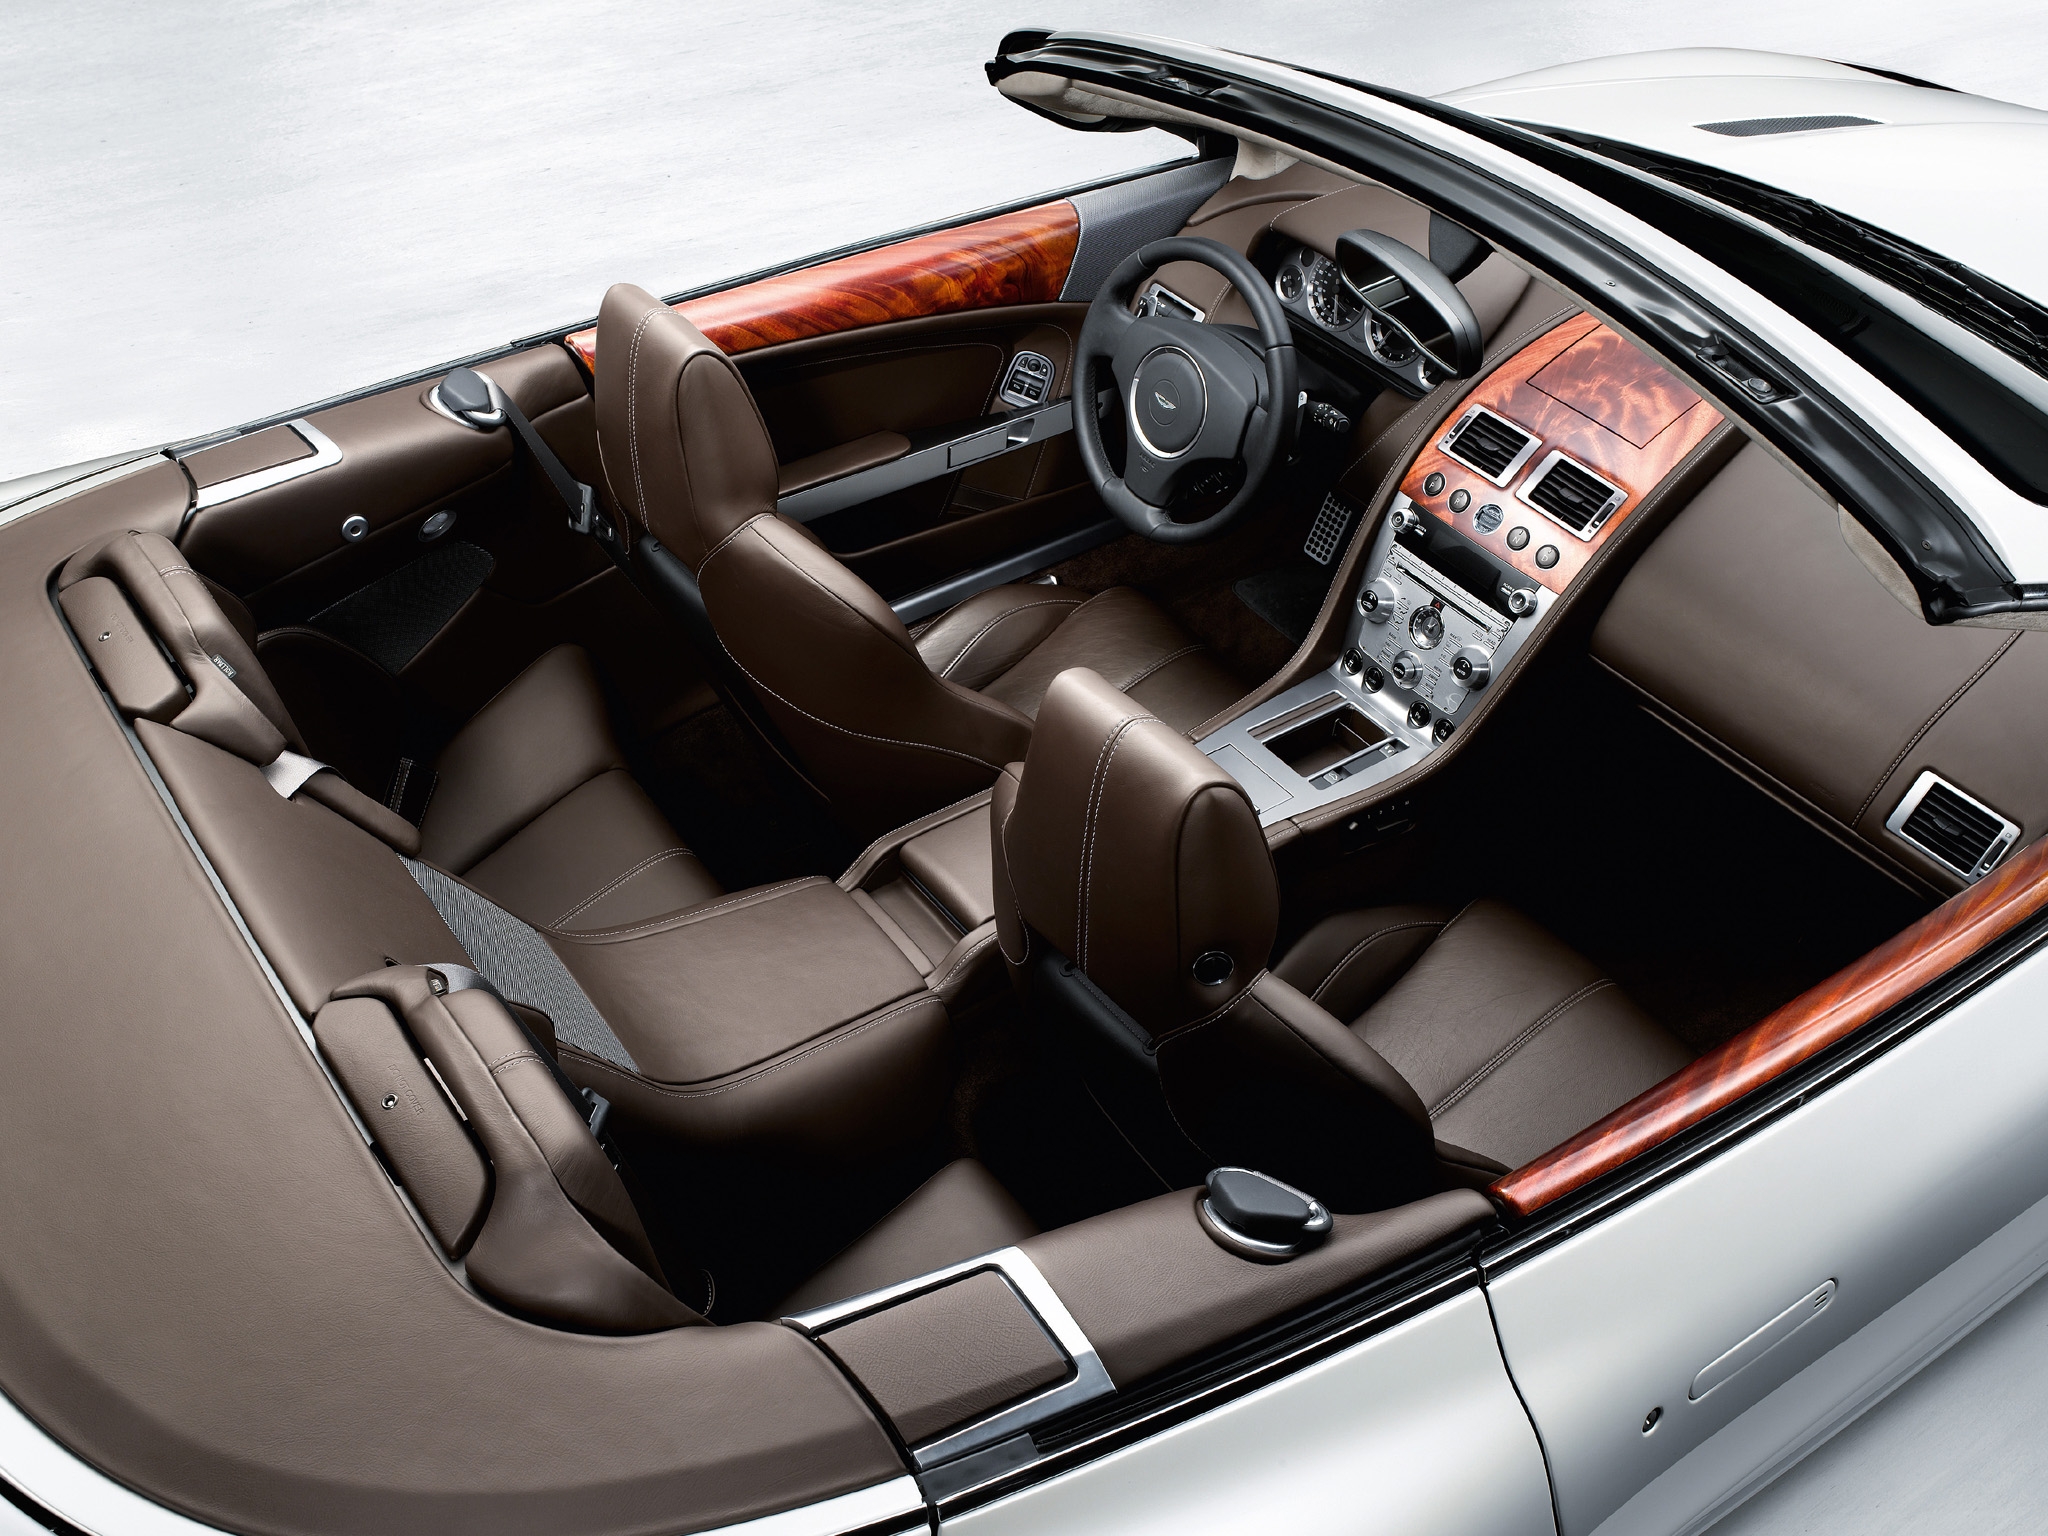 steering wheel, interior, aston martin, cars, view from above, brown, 2008, rudder, salon, speedometer, db9 Free Background